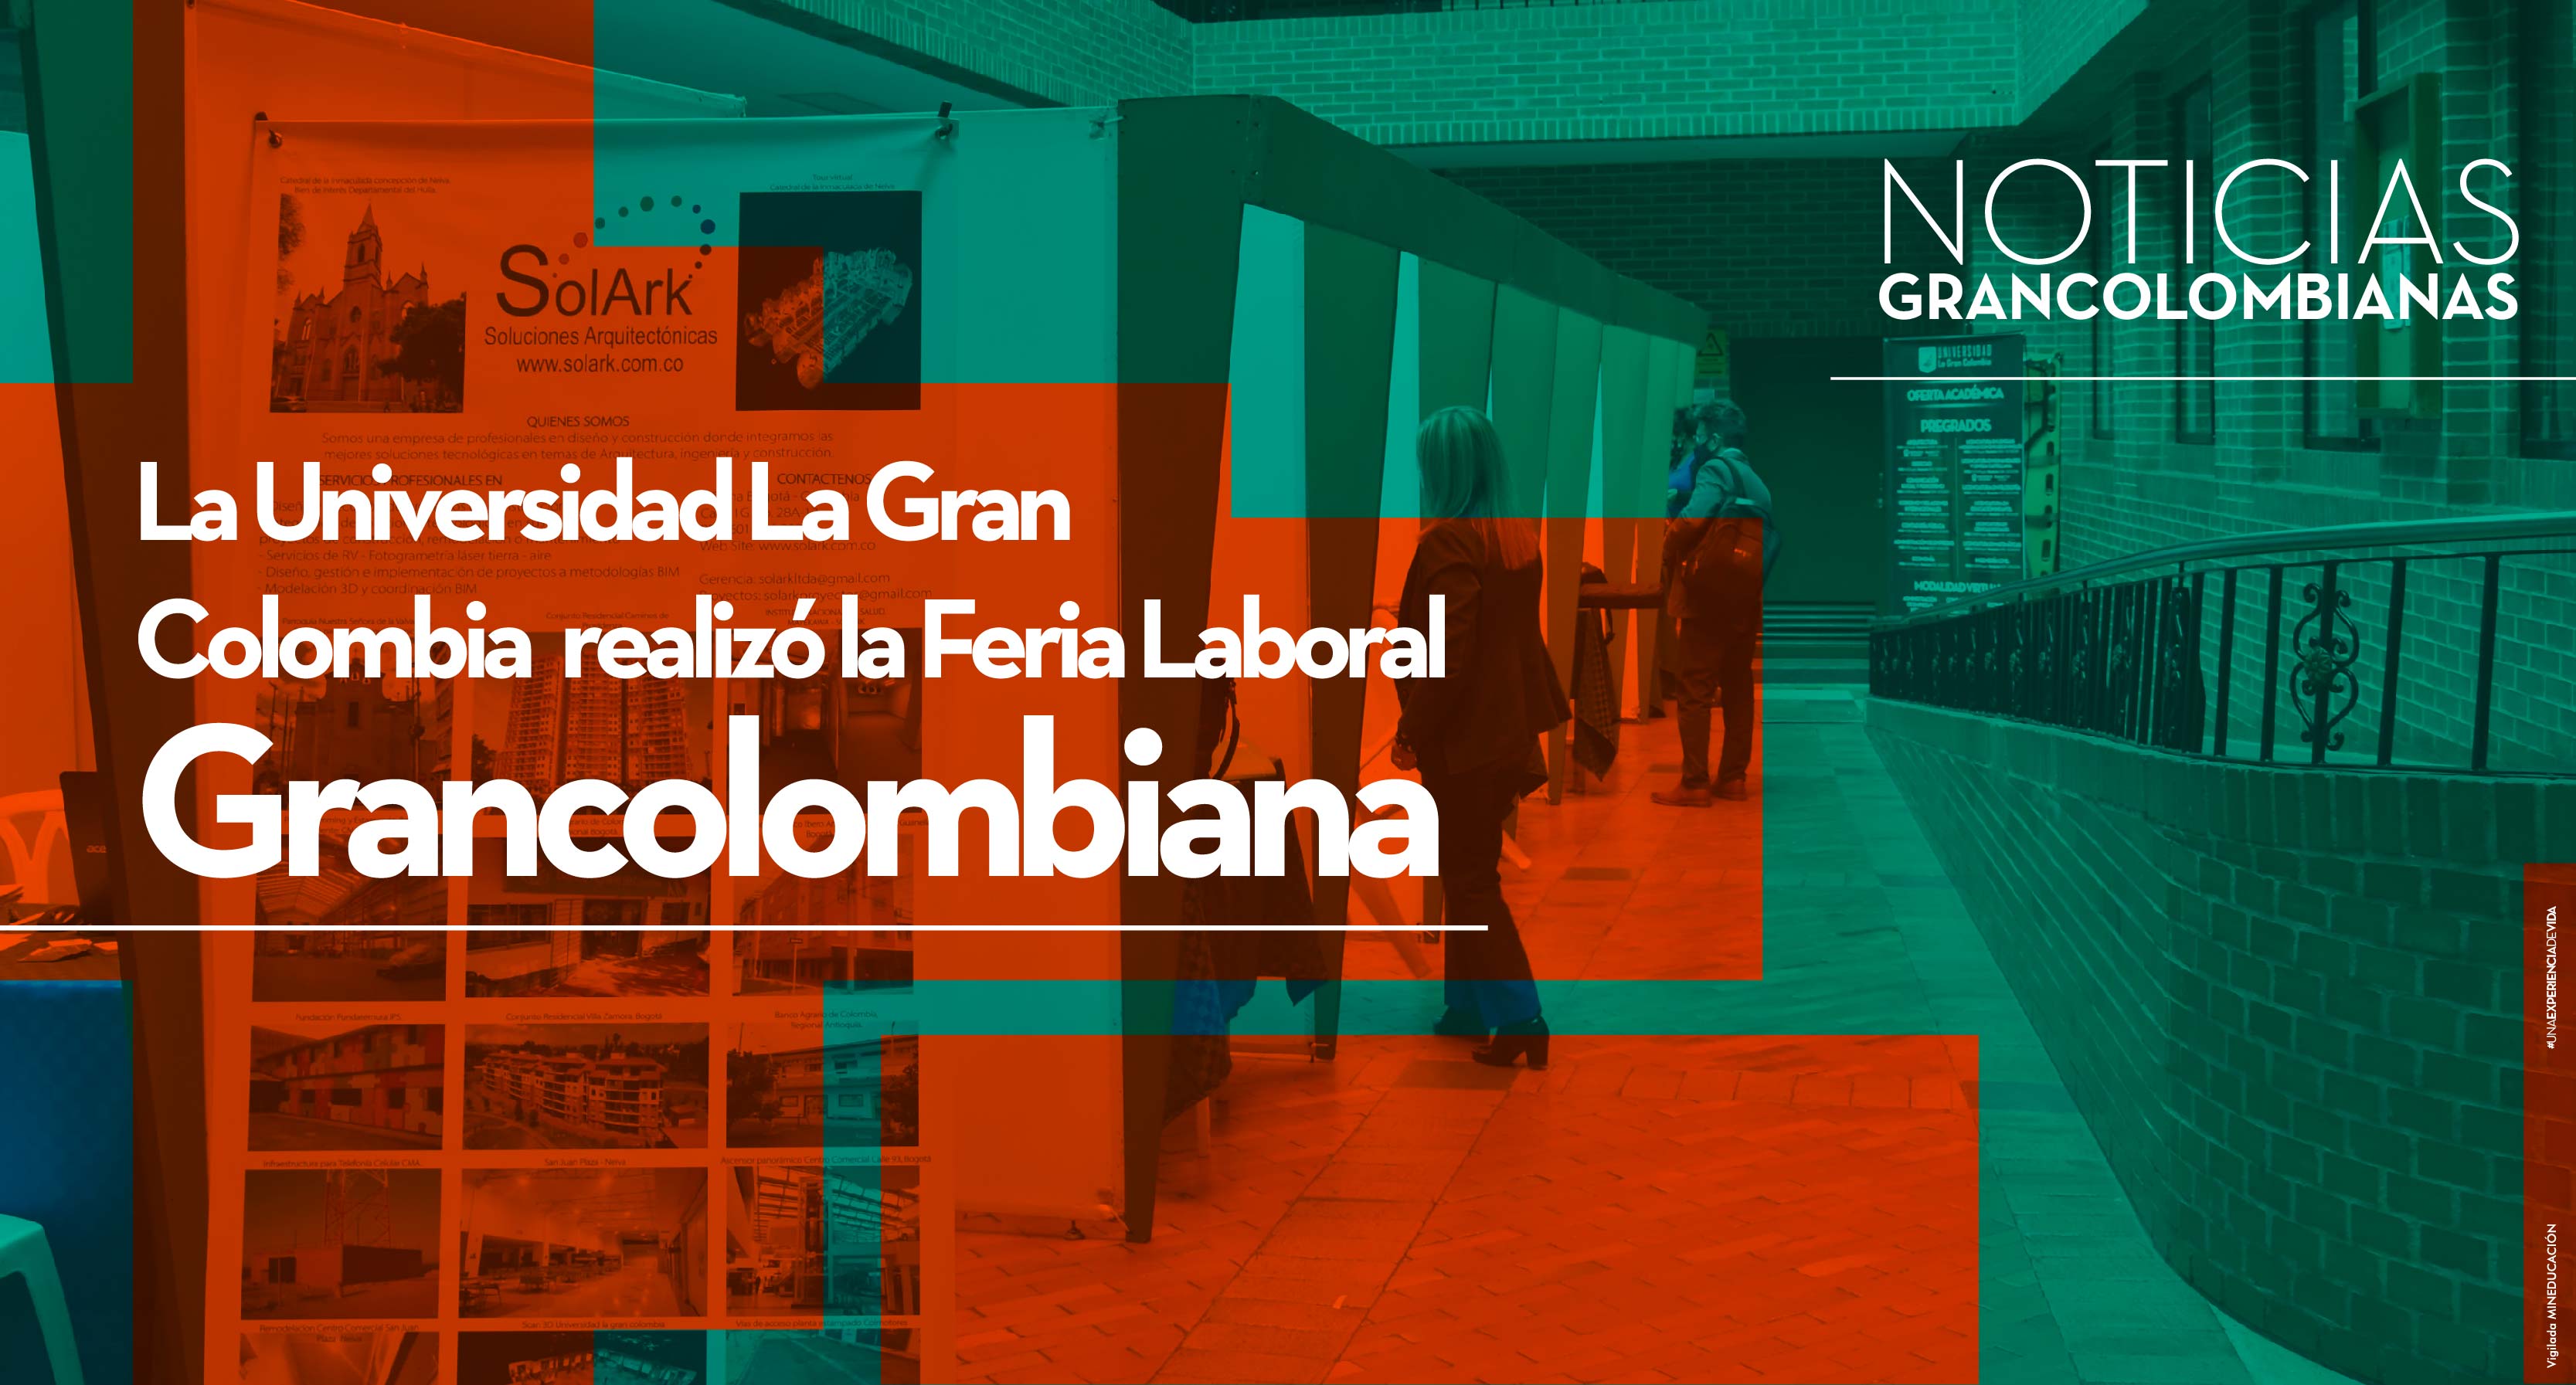 La Universidad La Gran Colombia realizó la Feria Laboral Grancolombiana